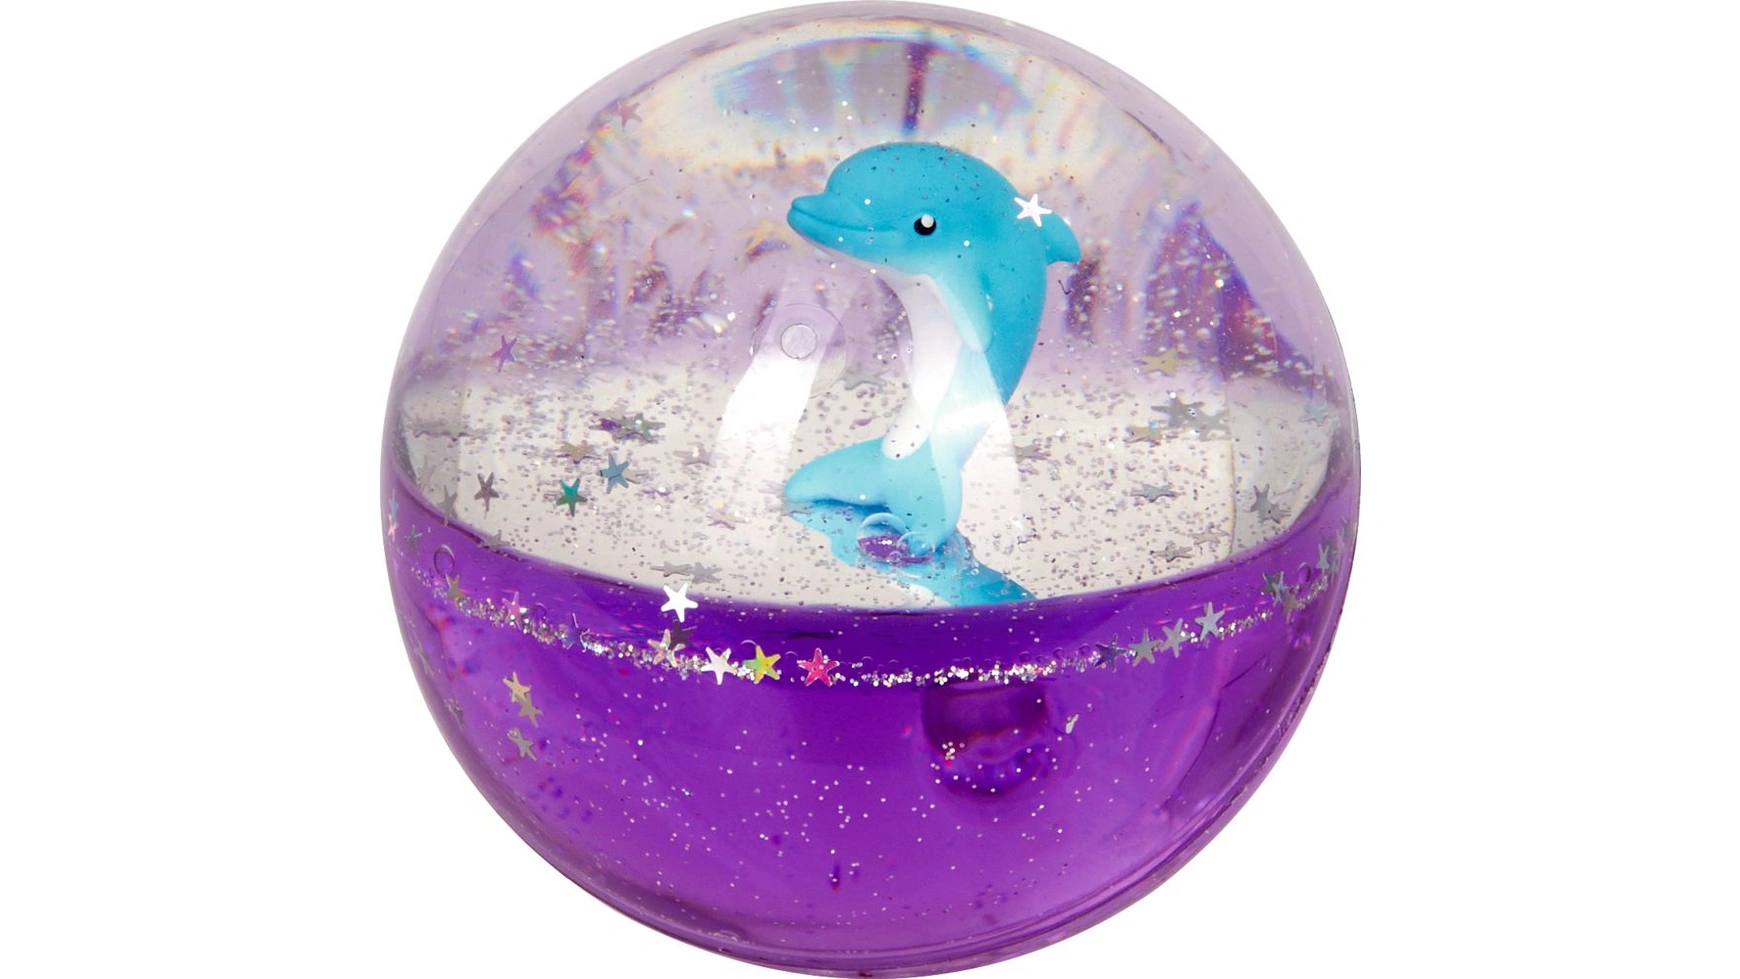 Die Spiegelburg Надувной мяч с дельфинами Нелла Никс